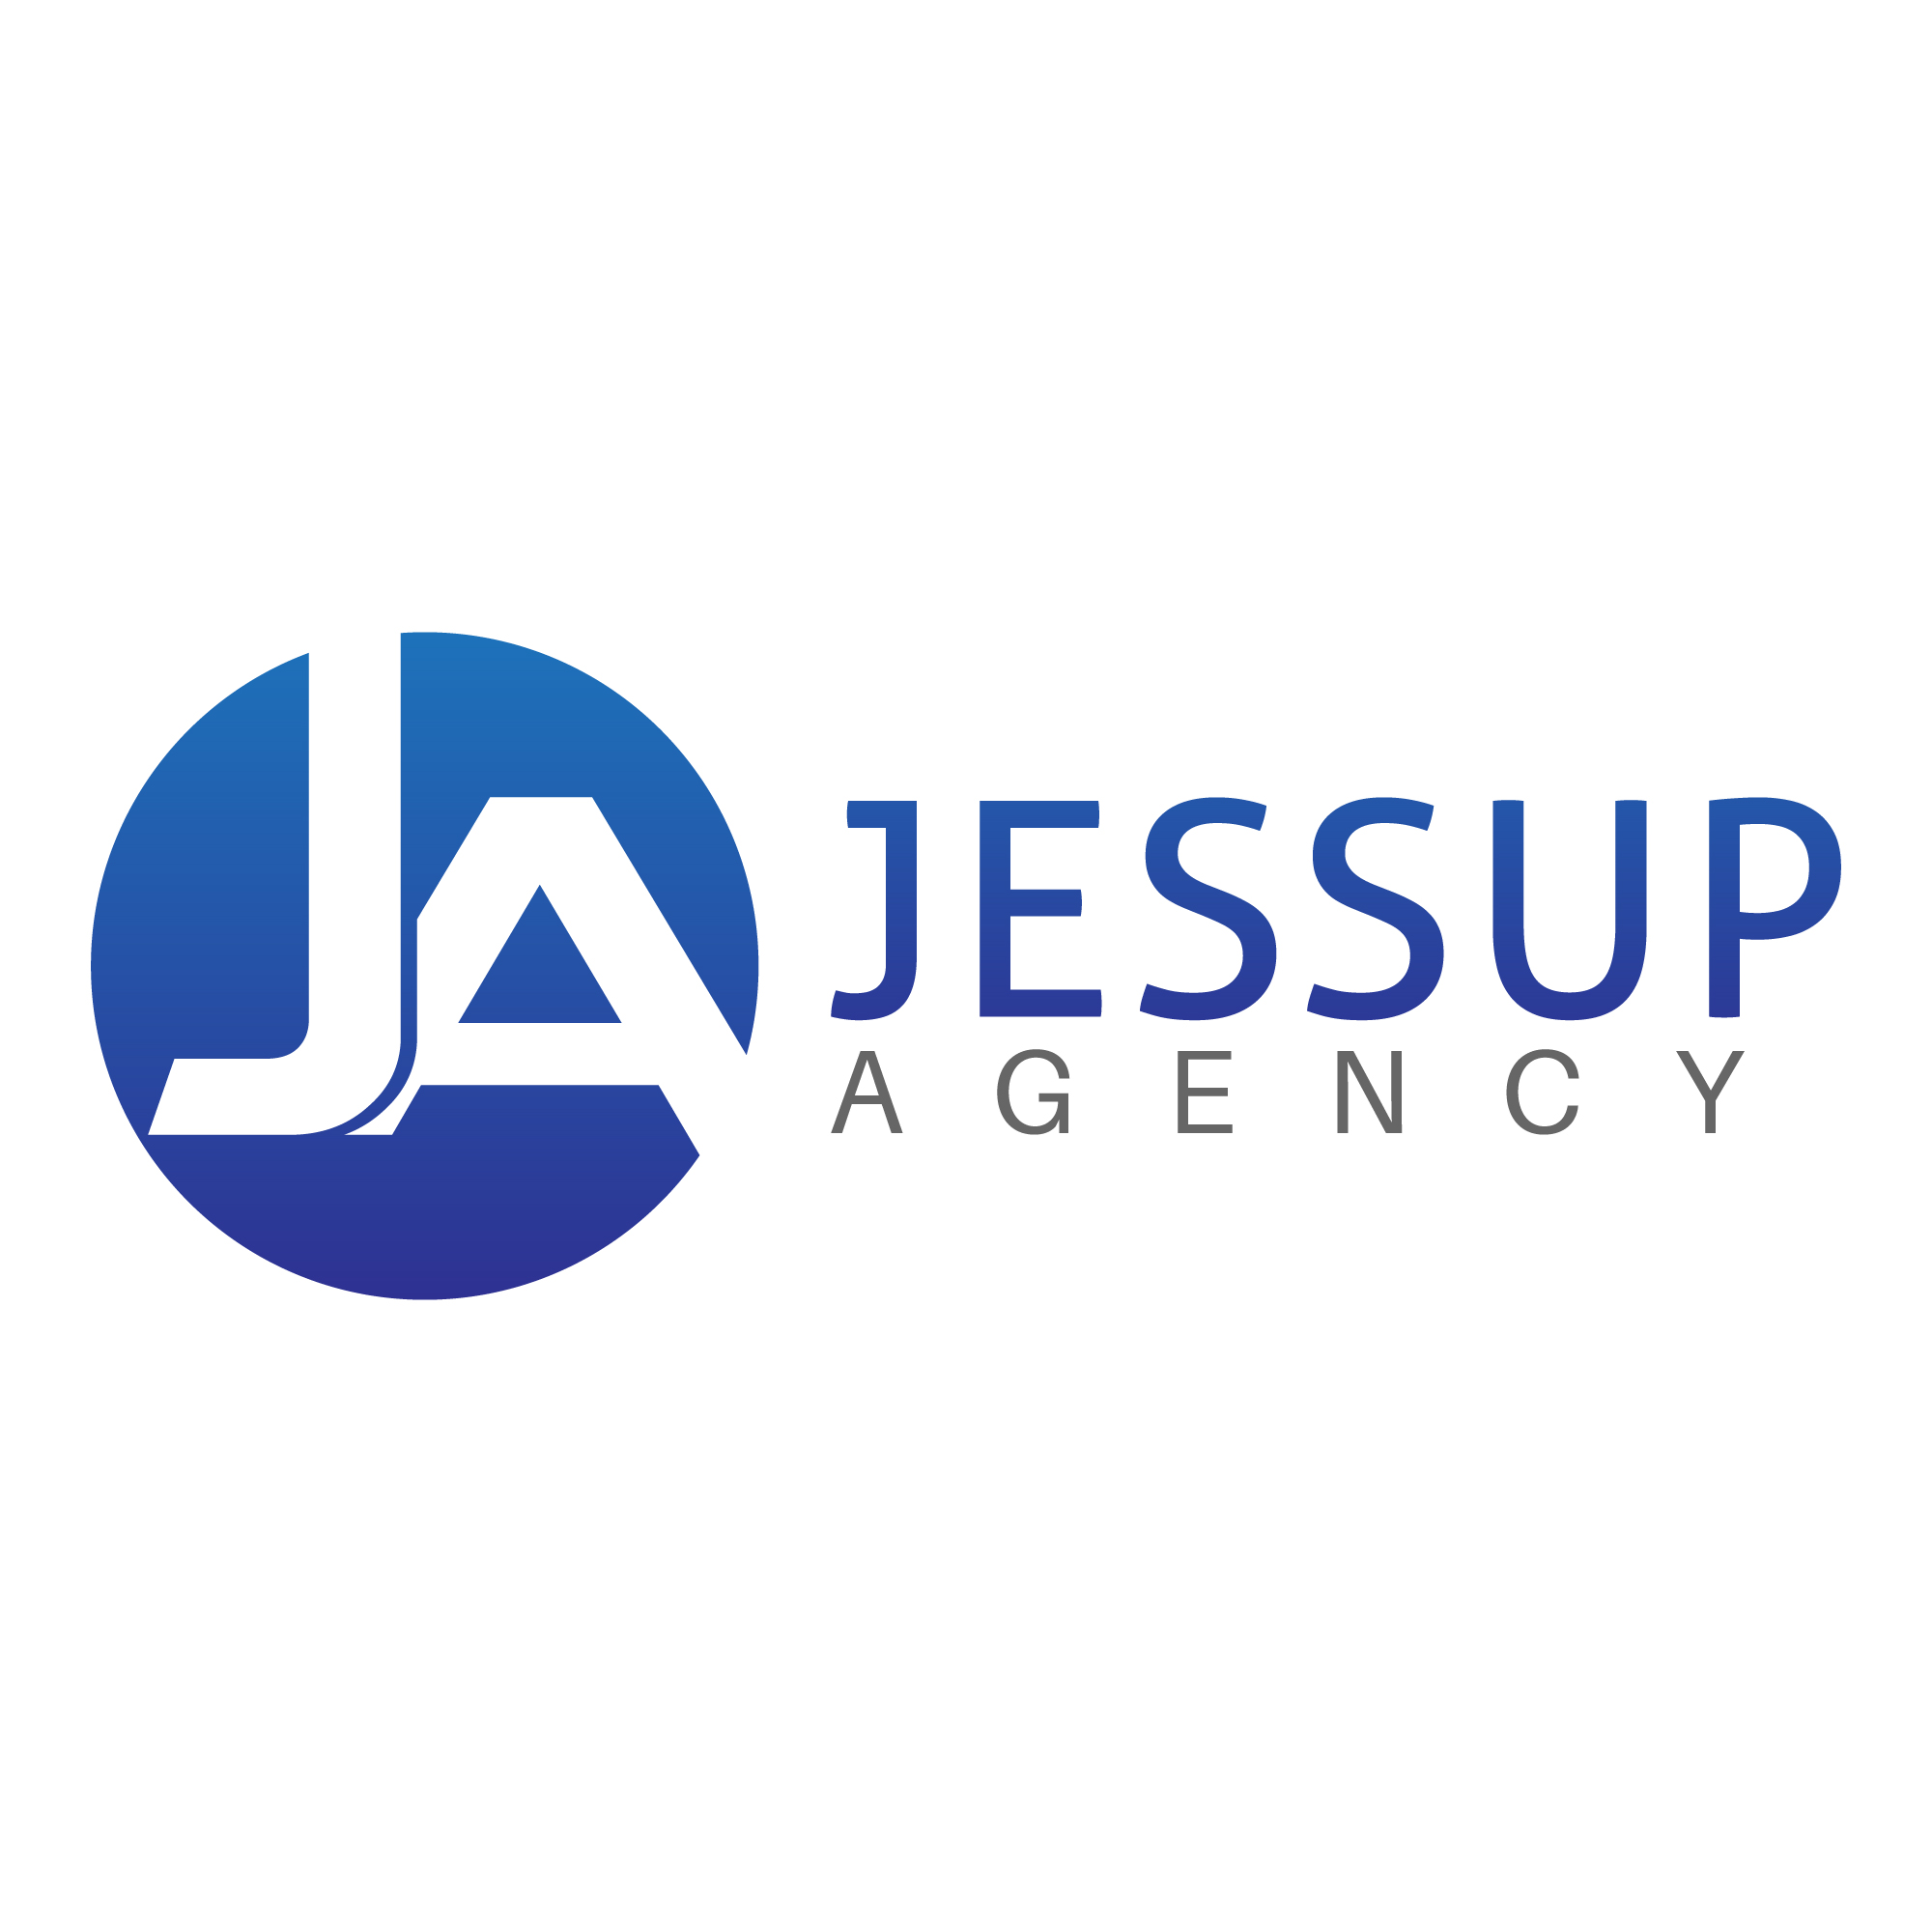 The Jessup Agency logo